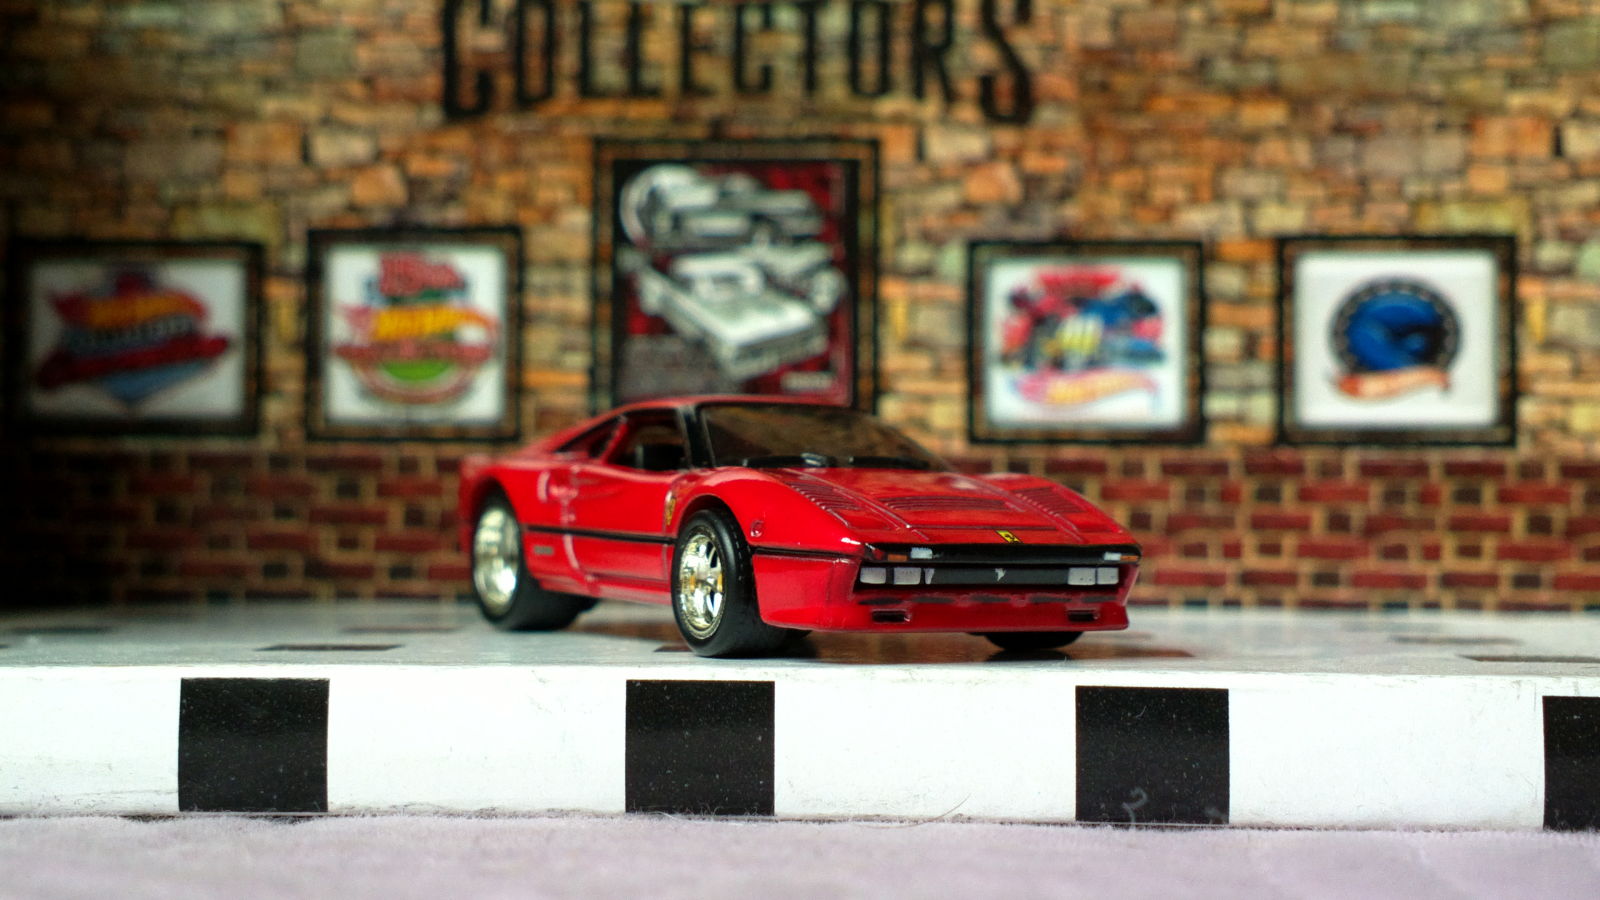 Illustration for article titled Ferrari Friday - Che bella!